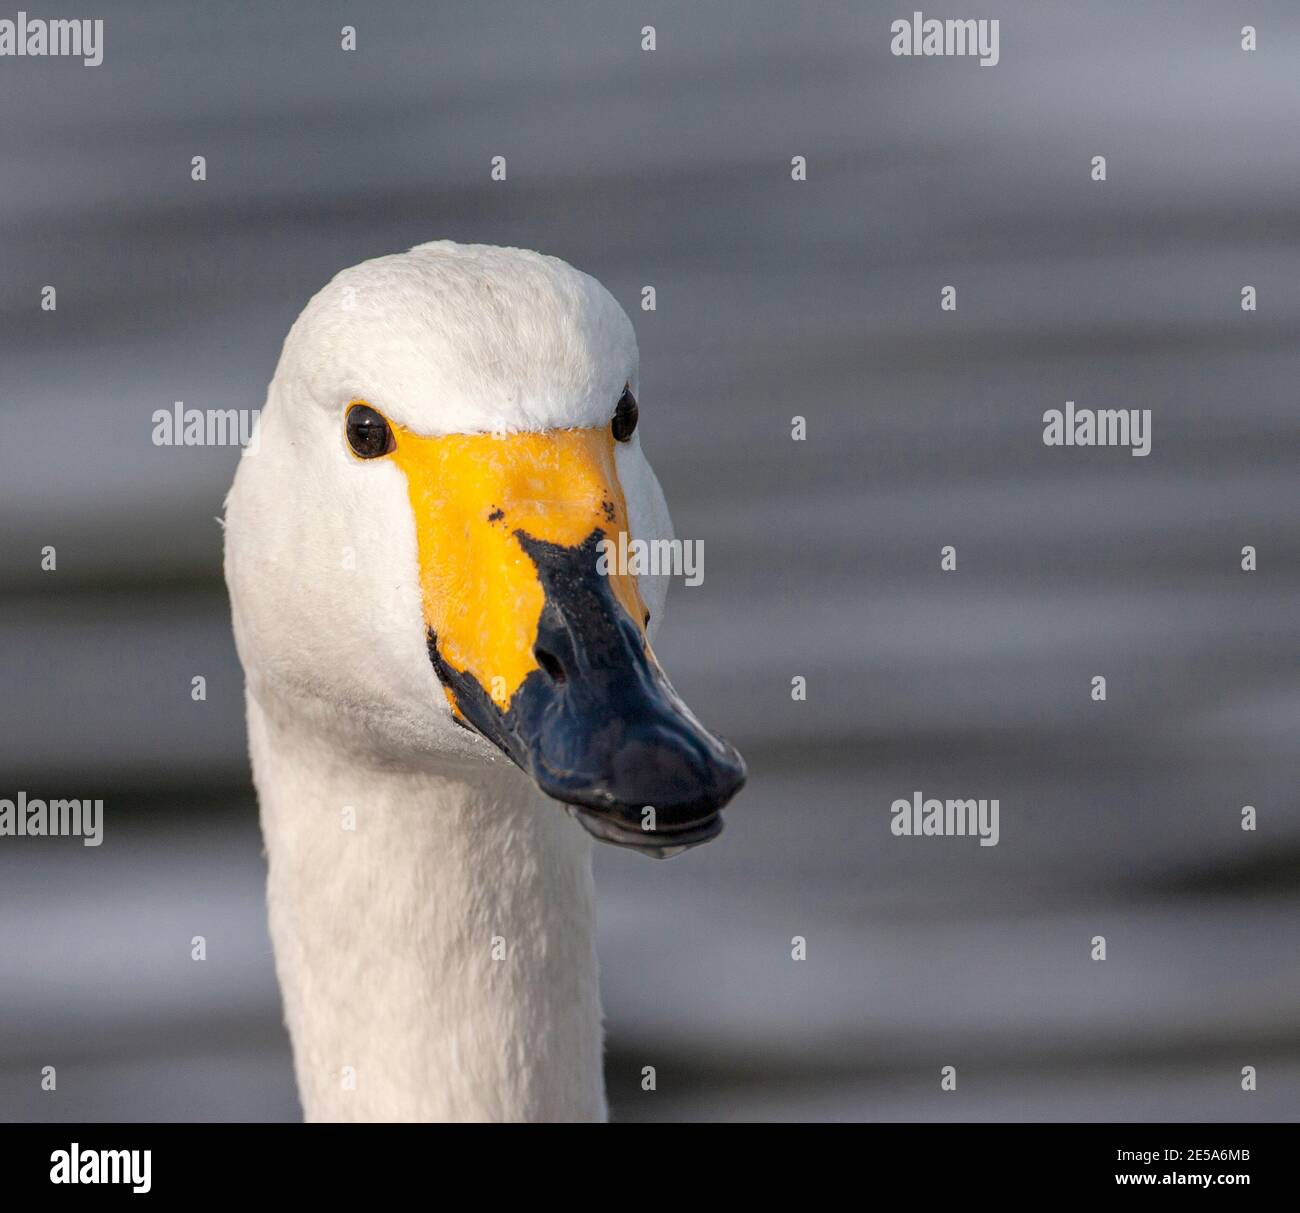 whooper swan (Cygnus cygnus), portrait, front view, Japan Stock Photo